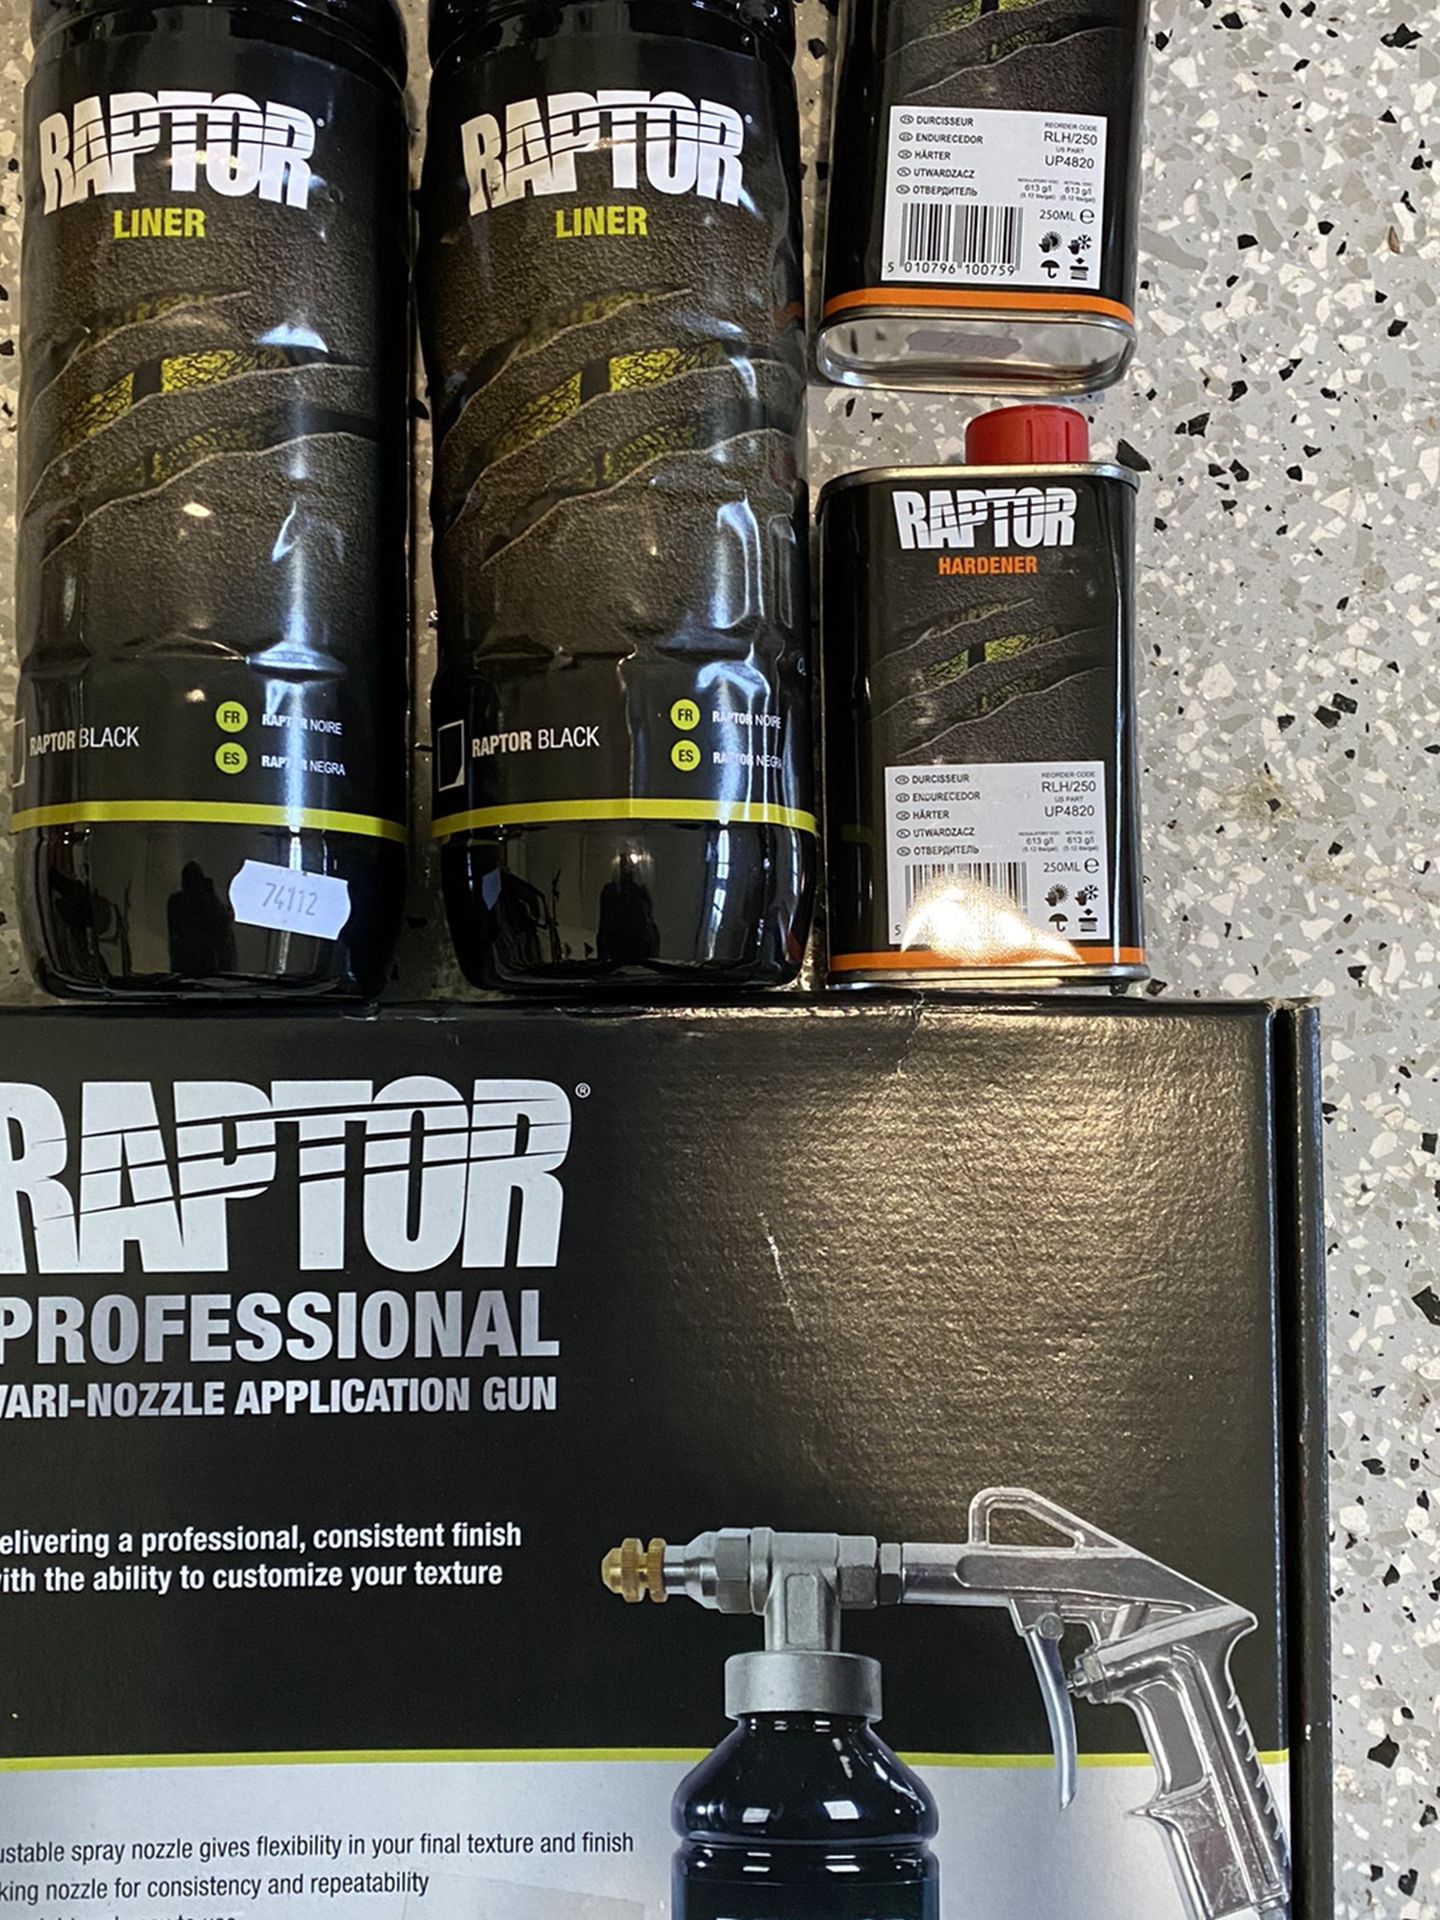 Raptor Bed Liner and Variable Application Gun